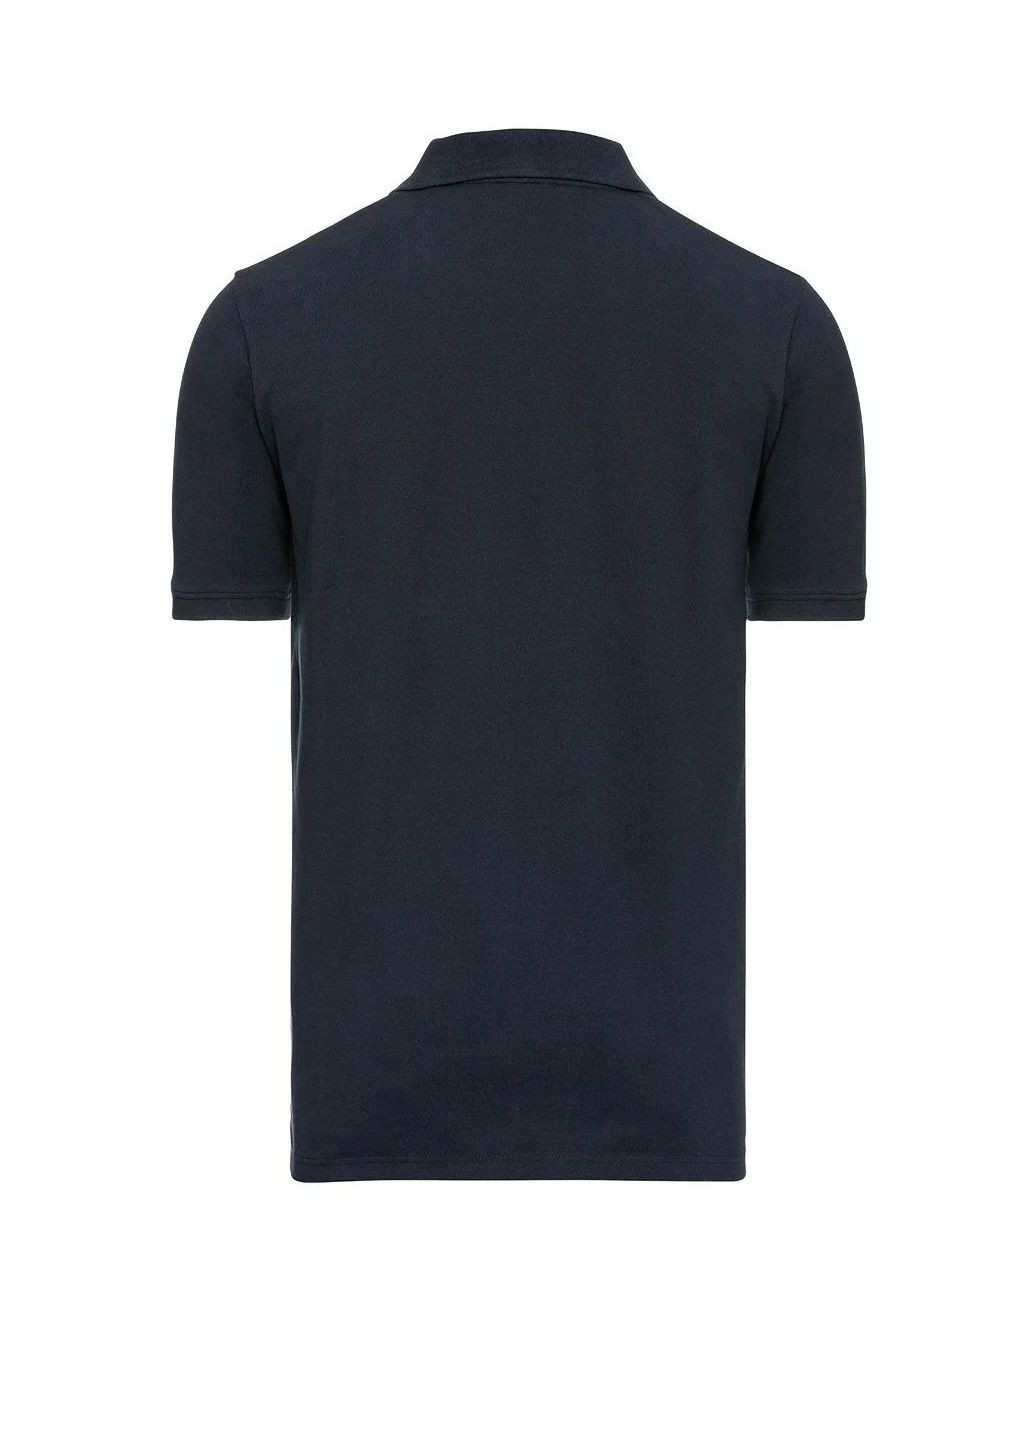 Темно-синяя футболка-футболка-поло для мужчин Livergy однотонная